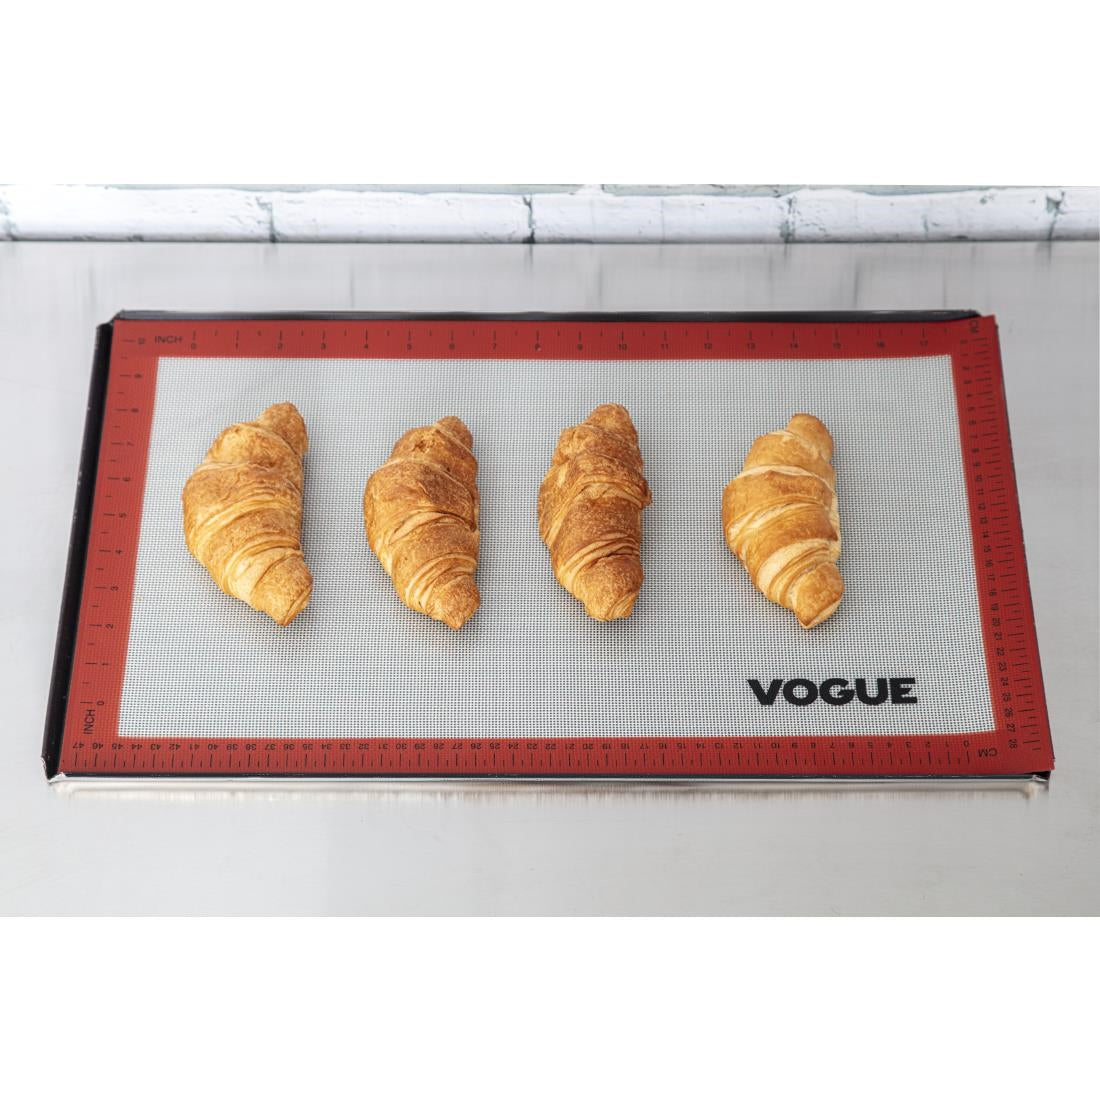 Vogue Non-Stick Silicone Baking Mat 520 x 315mm